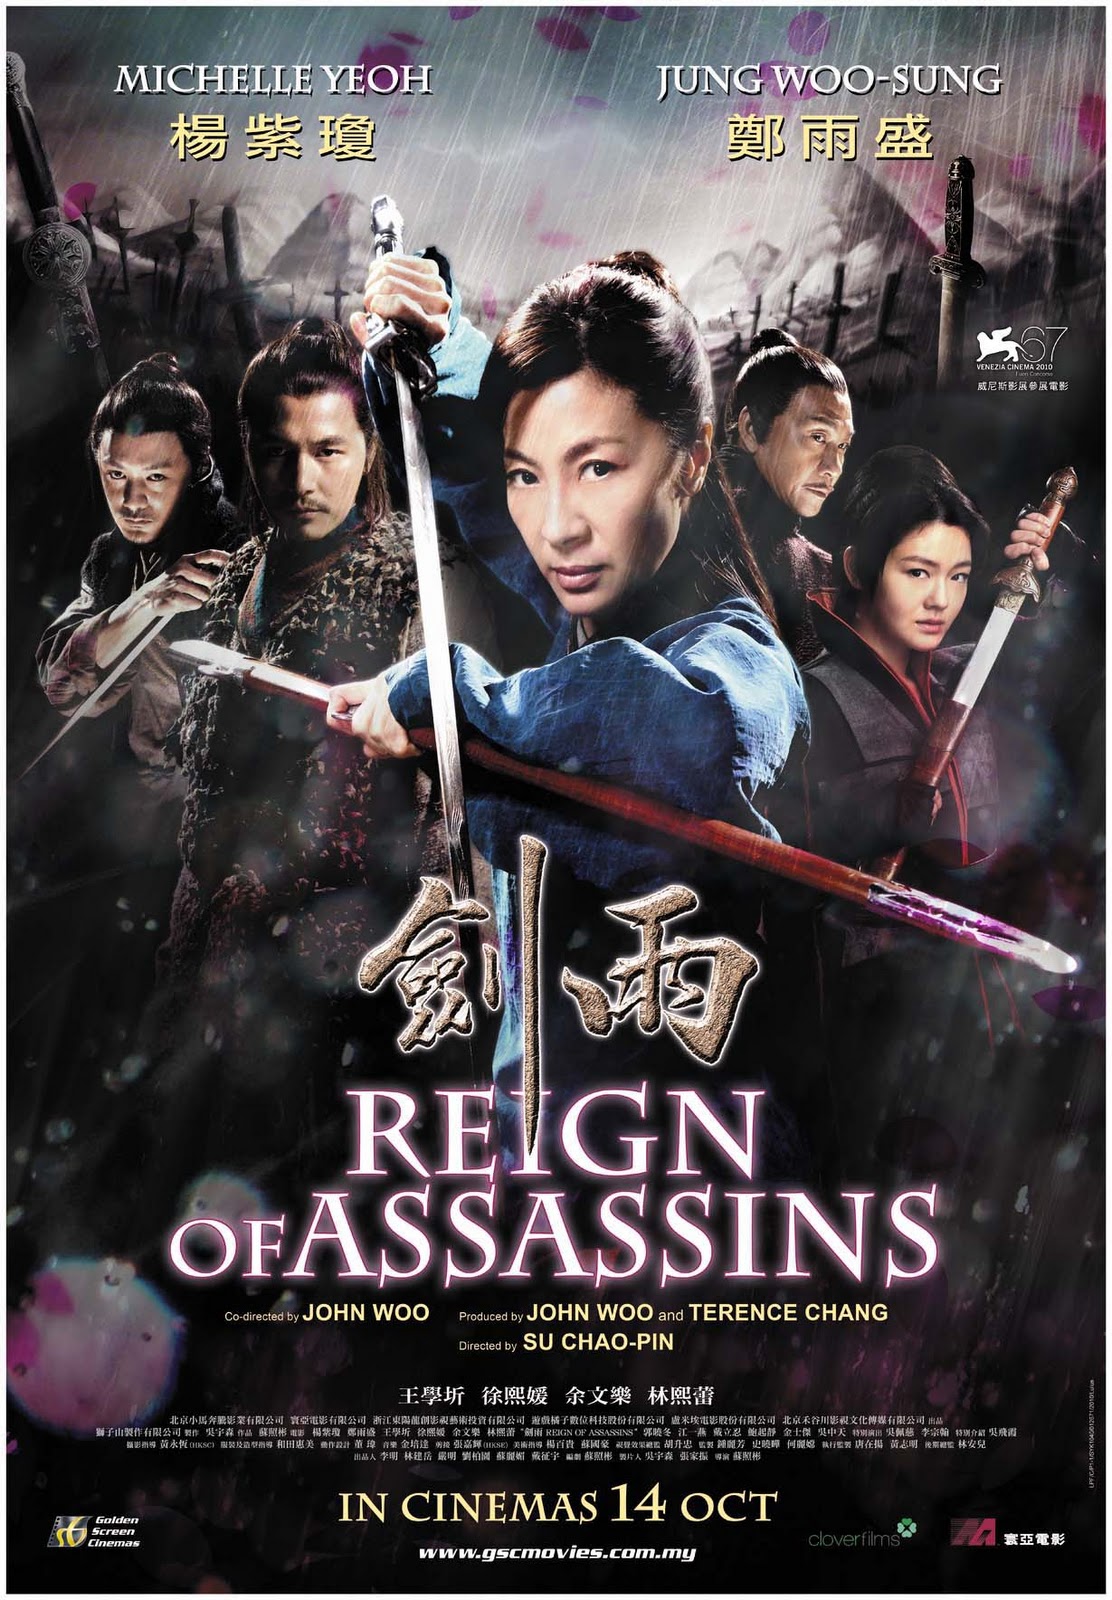 http://www.capsulecomputers.com.au/wp-content/uploads/reign-of-assassins-poster.jpg